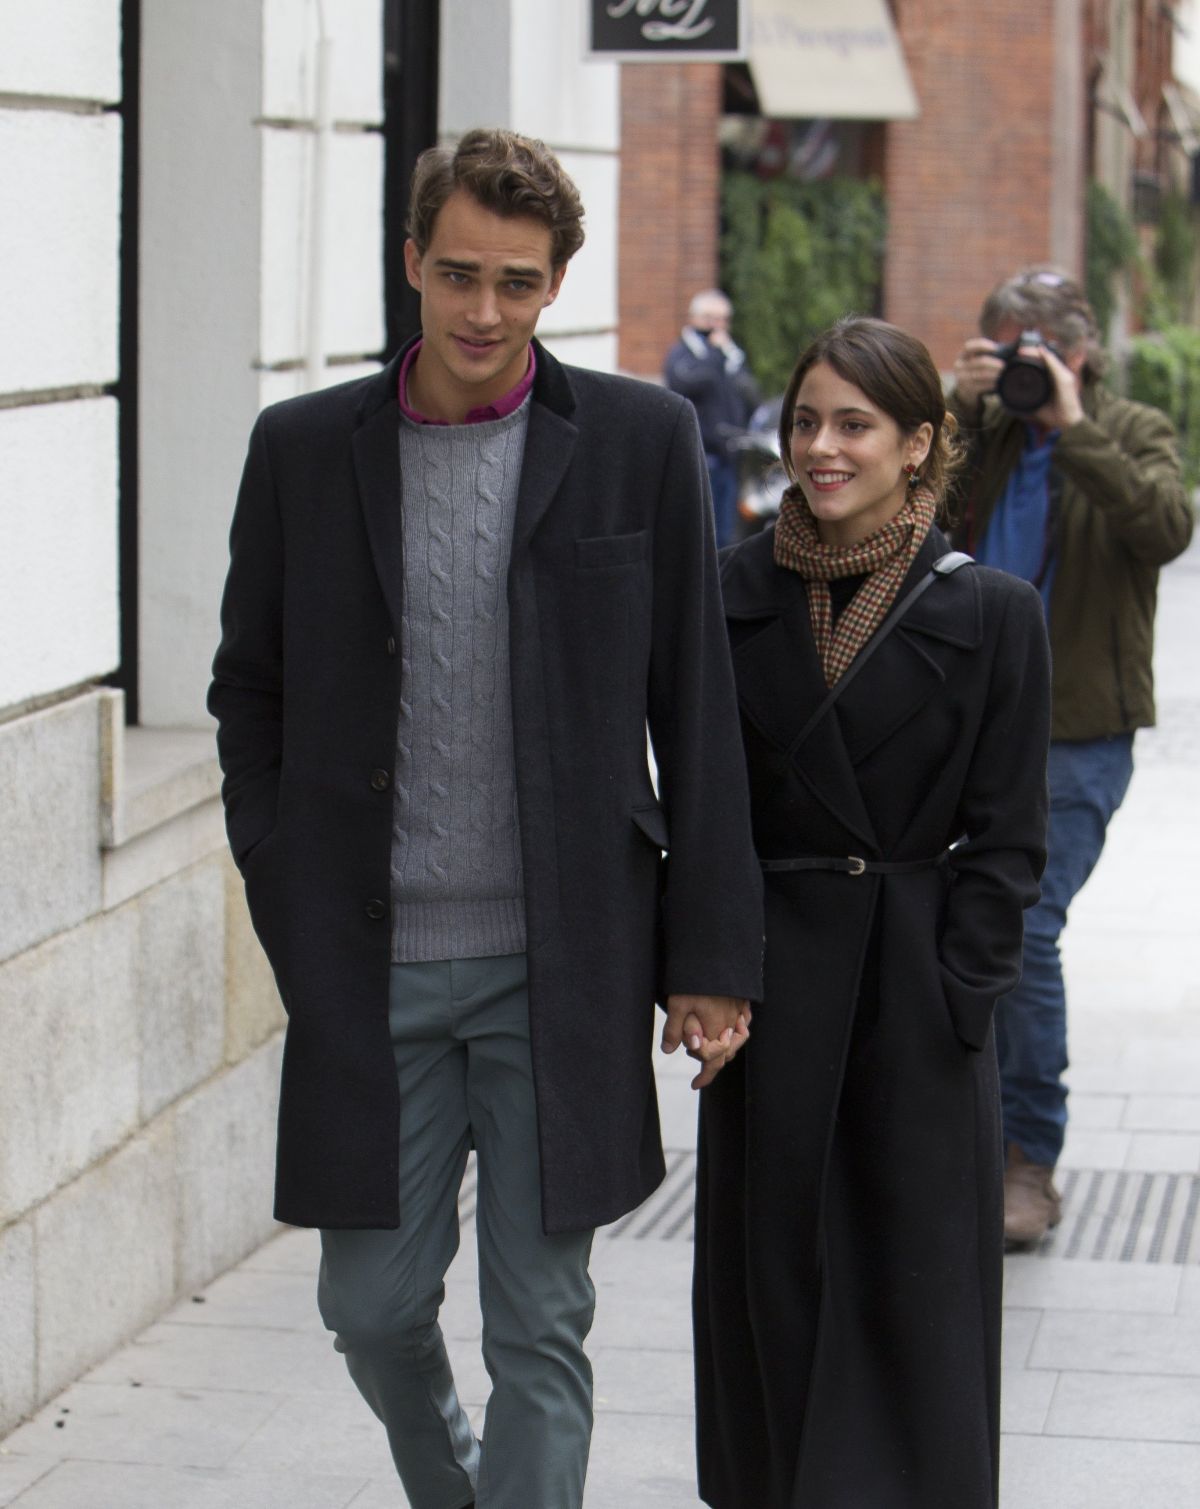 Martina Stoessel with her boyfriend Pepe Barroso